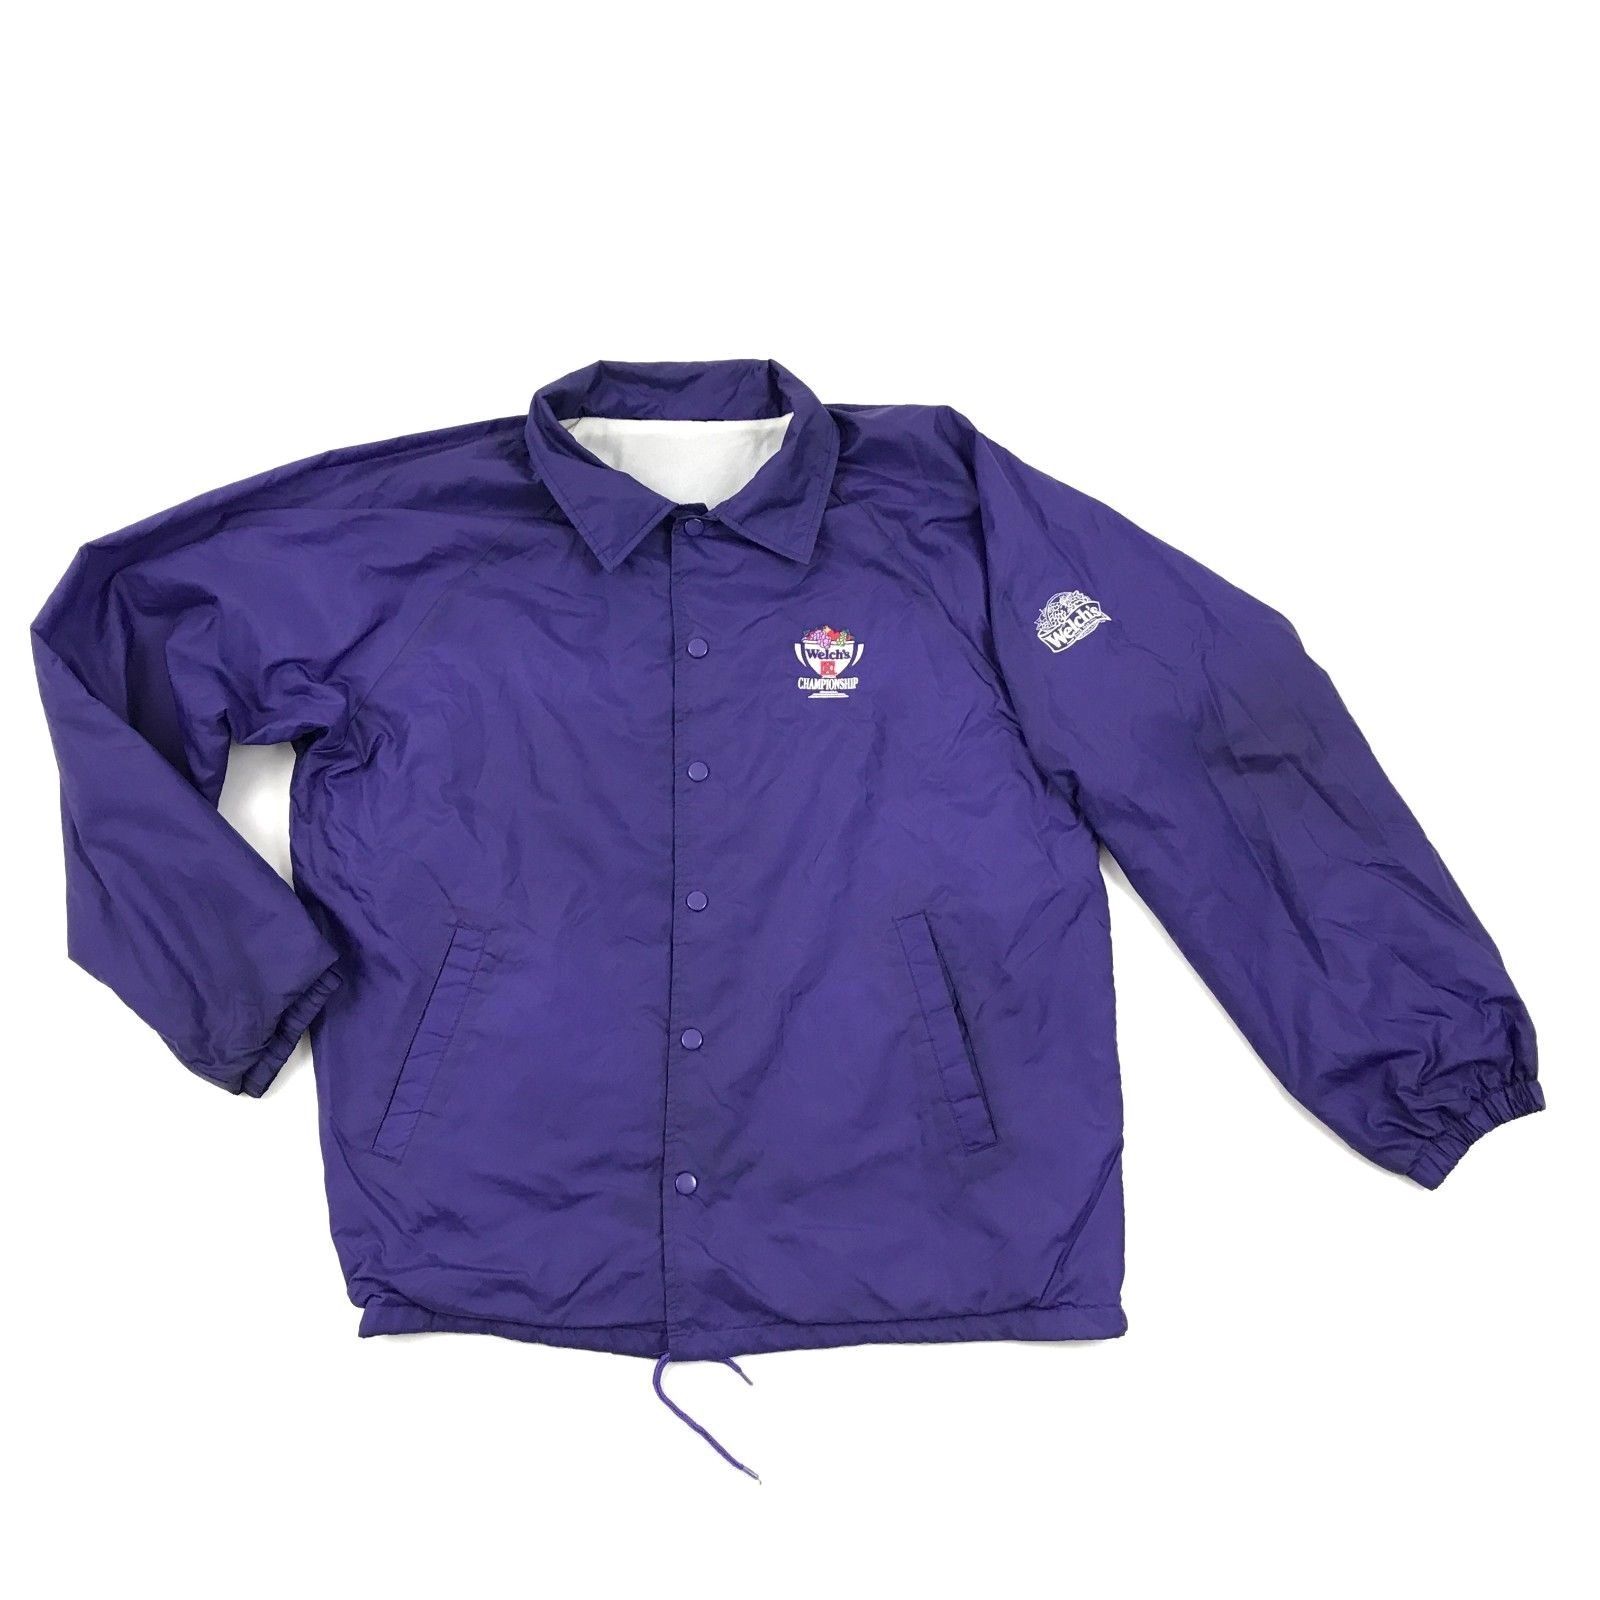 VINTAGE Welch's Championship Golf Tournament Jacket Size M / L Purple ...